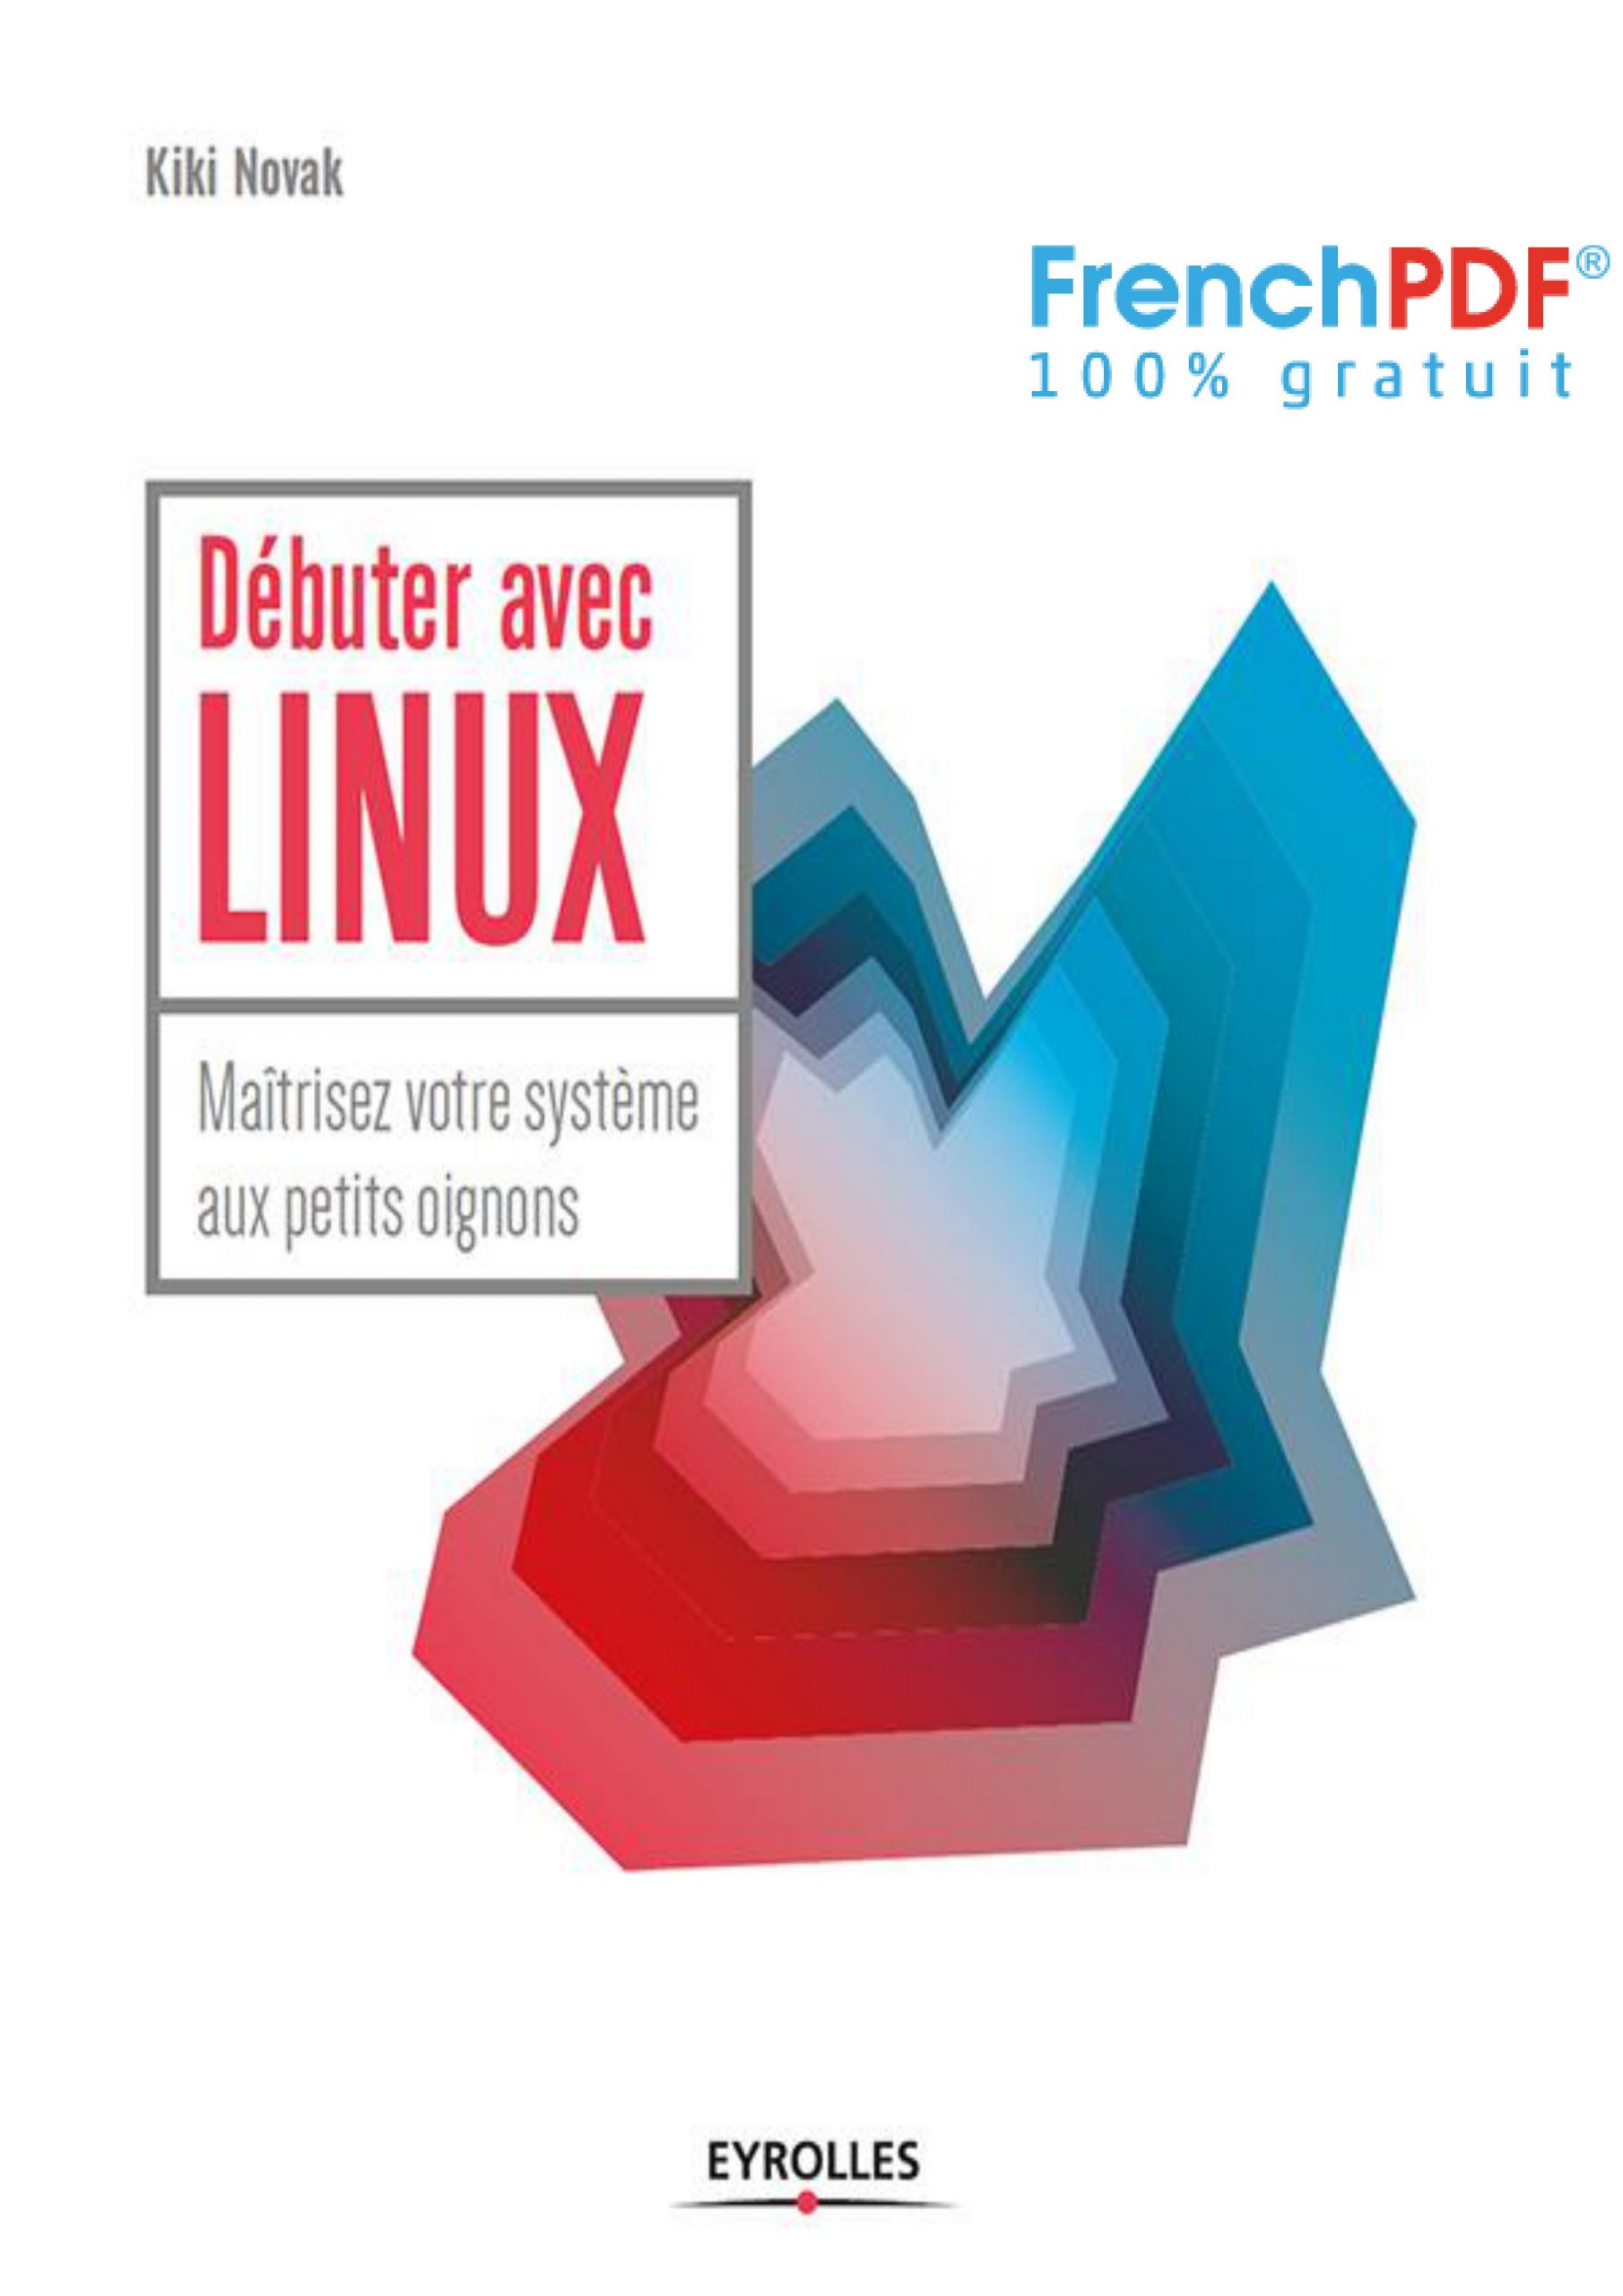 Débutez avec Linux - Kiki Novak - FrenchPDF